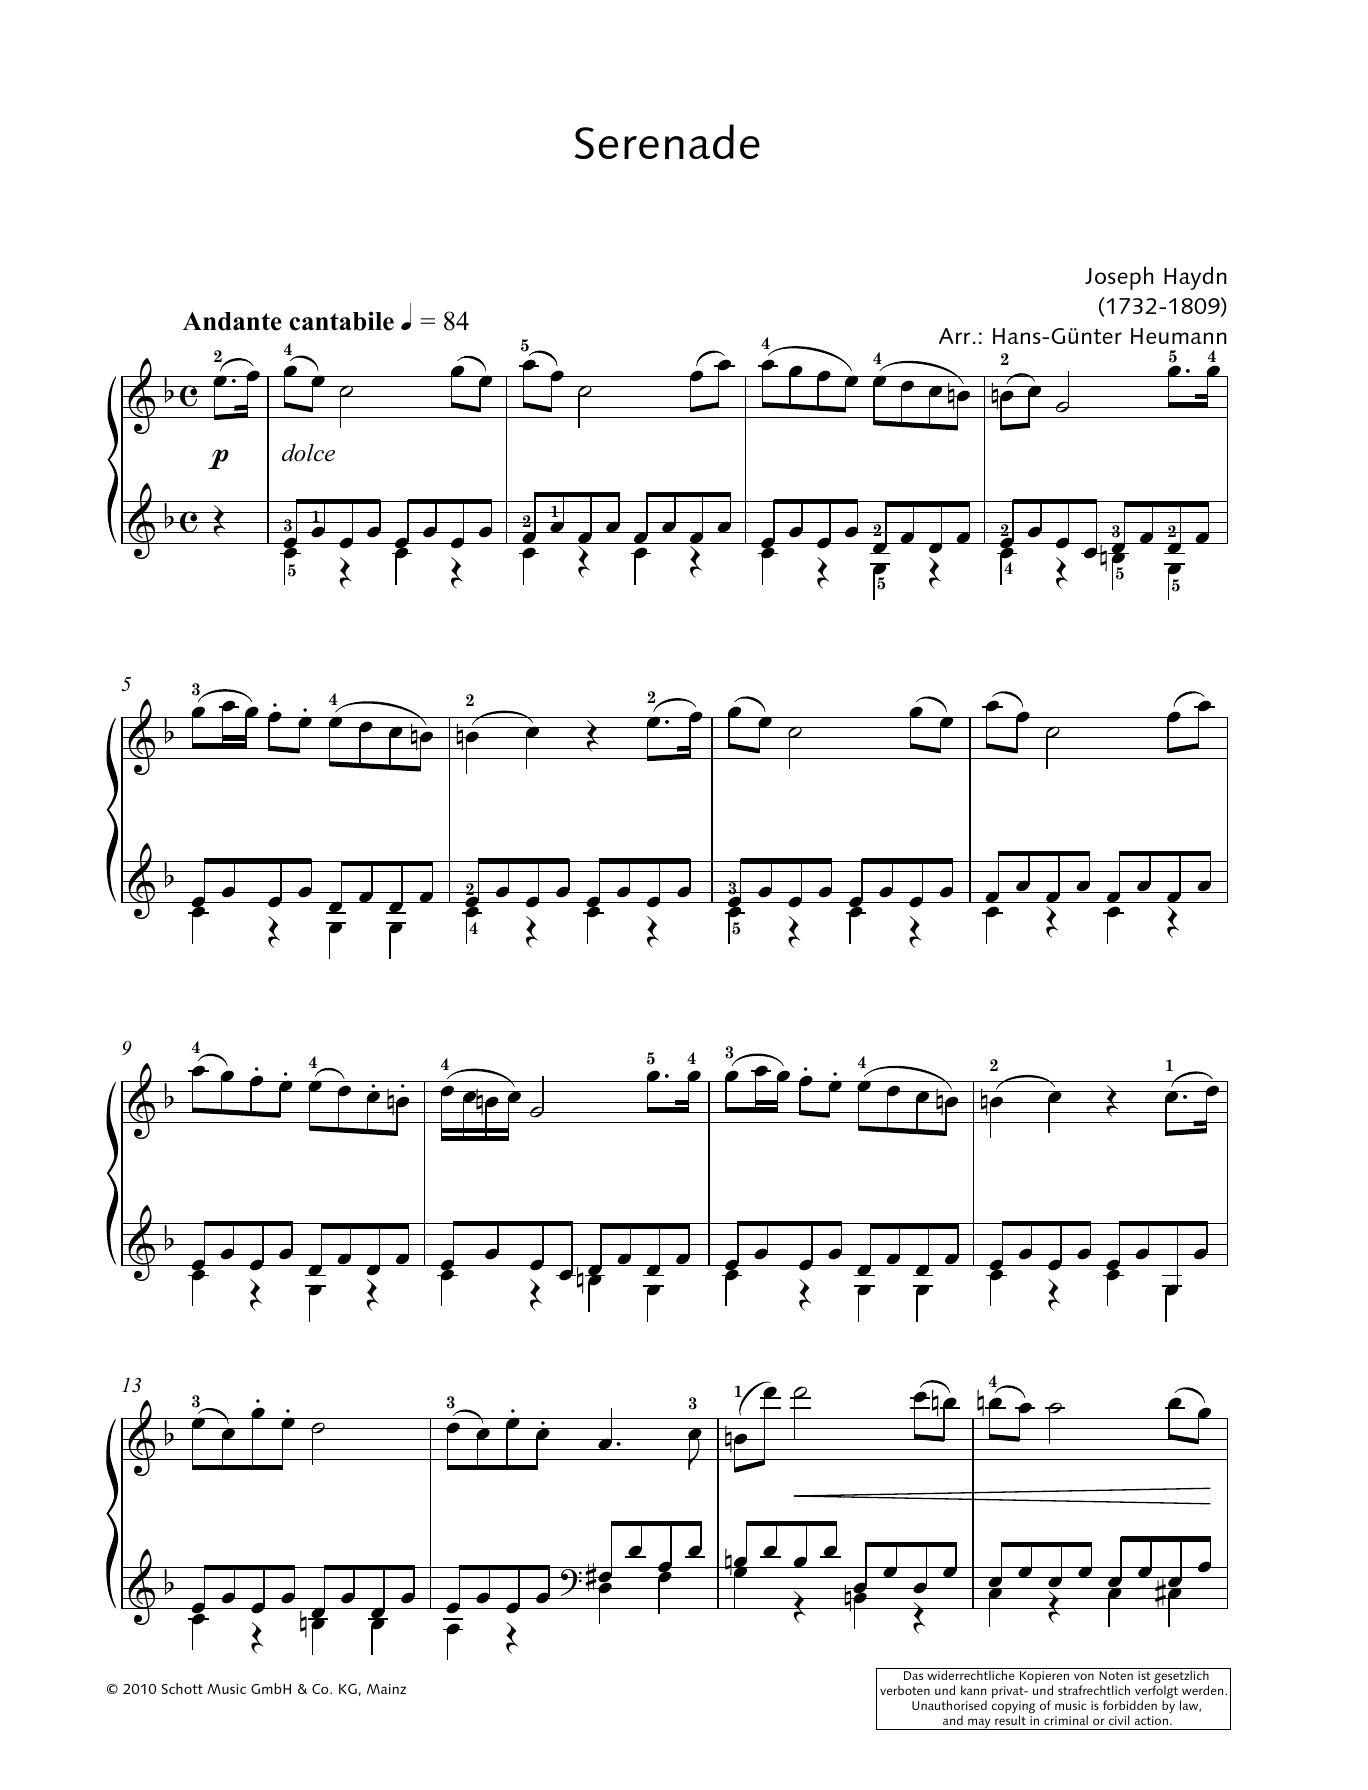 Hans-Gunter Heumann Serenade Sheet Music Notes & Chords for Piano Solo - Download or Print PDF